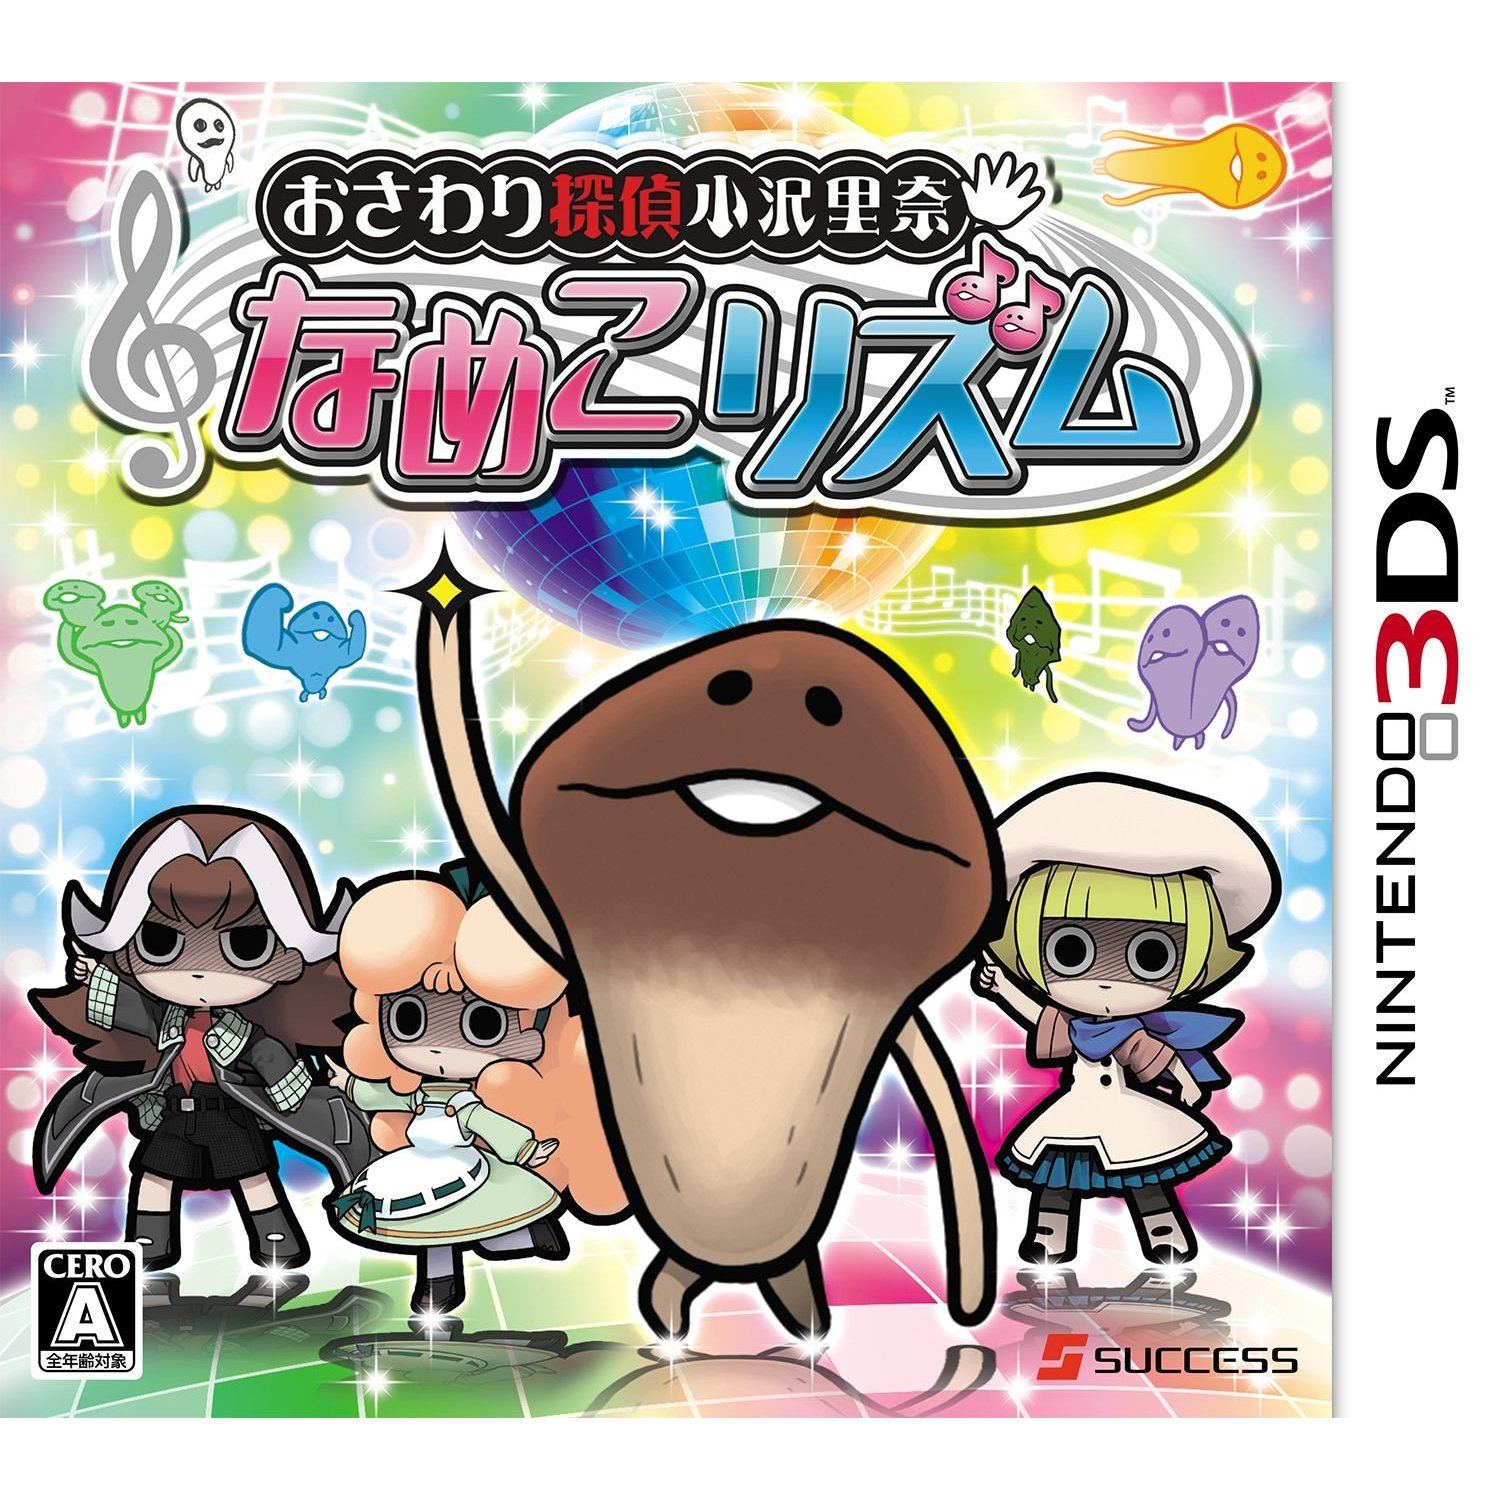 Osawari Tantei Rina Nameko Rhyme Nintendo 3DS